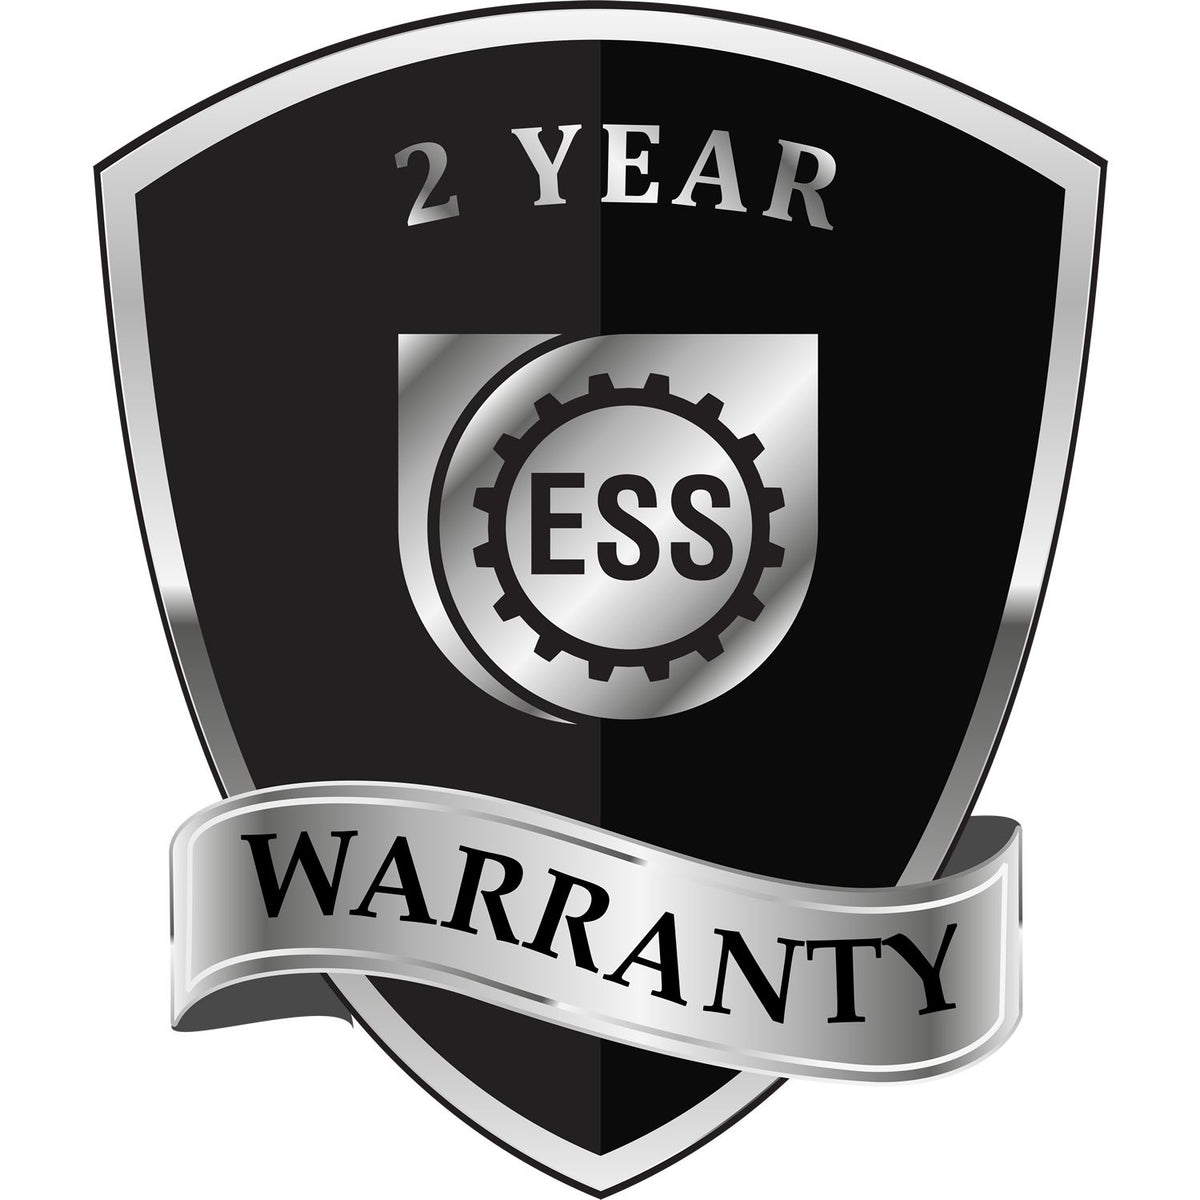 A black and silver badge or emblem showing warranty information for the Hybrid Missouri Landscape Architect Seal